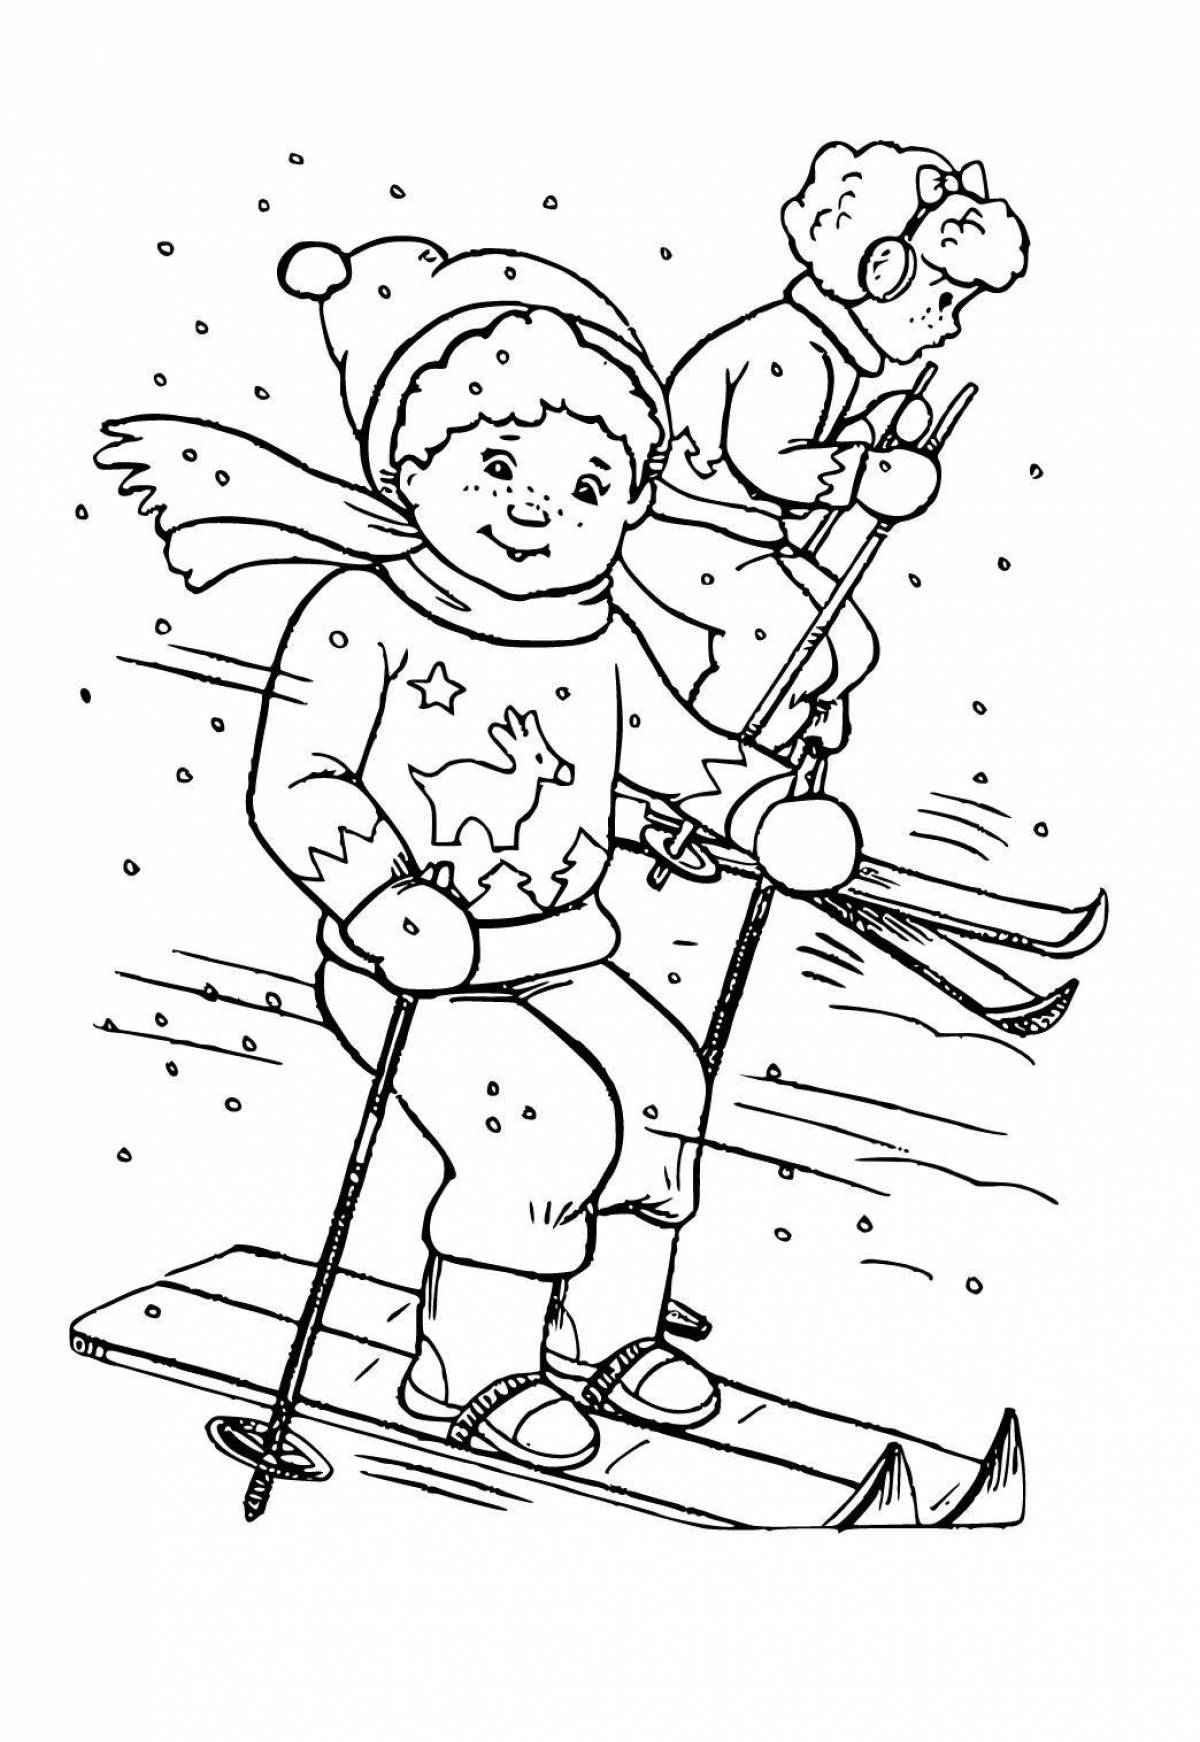 Coloring book experienced senior skier